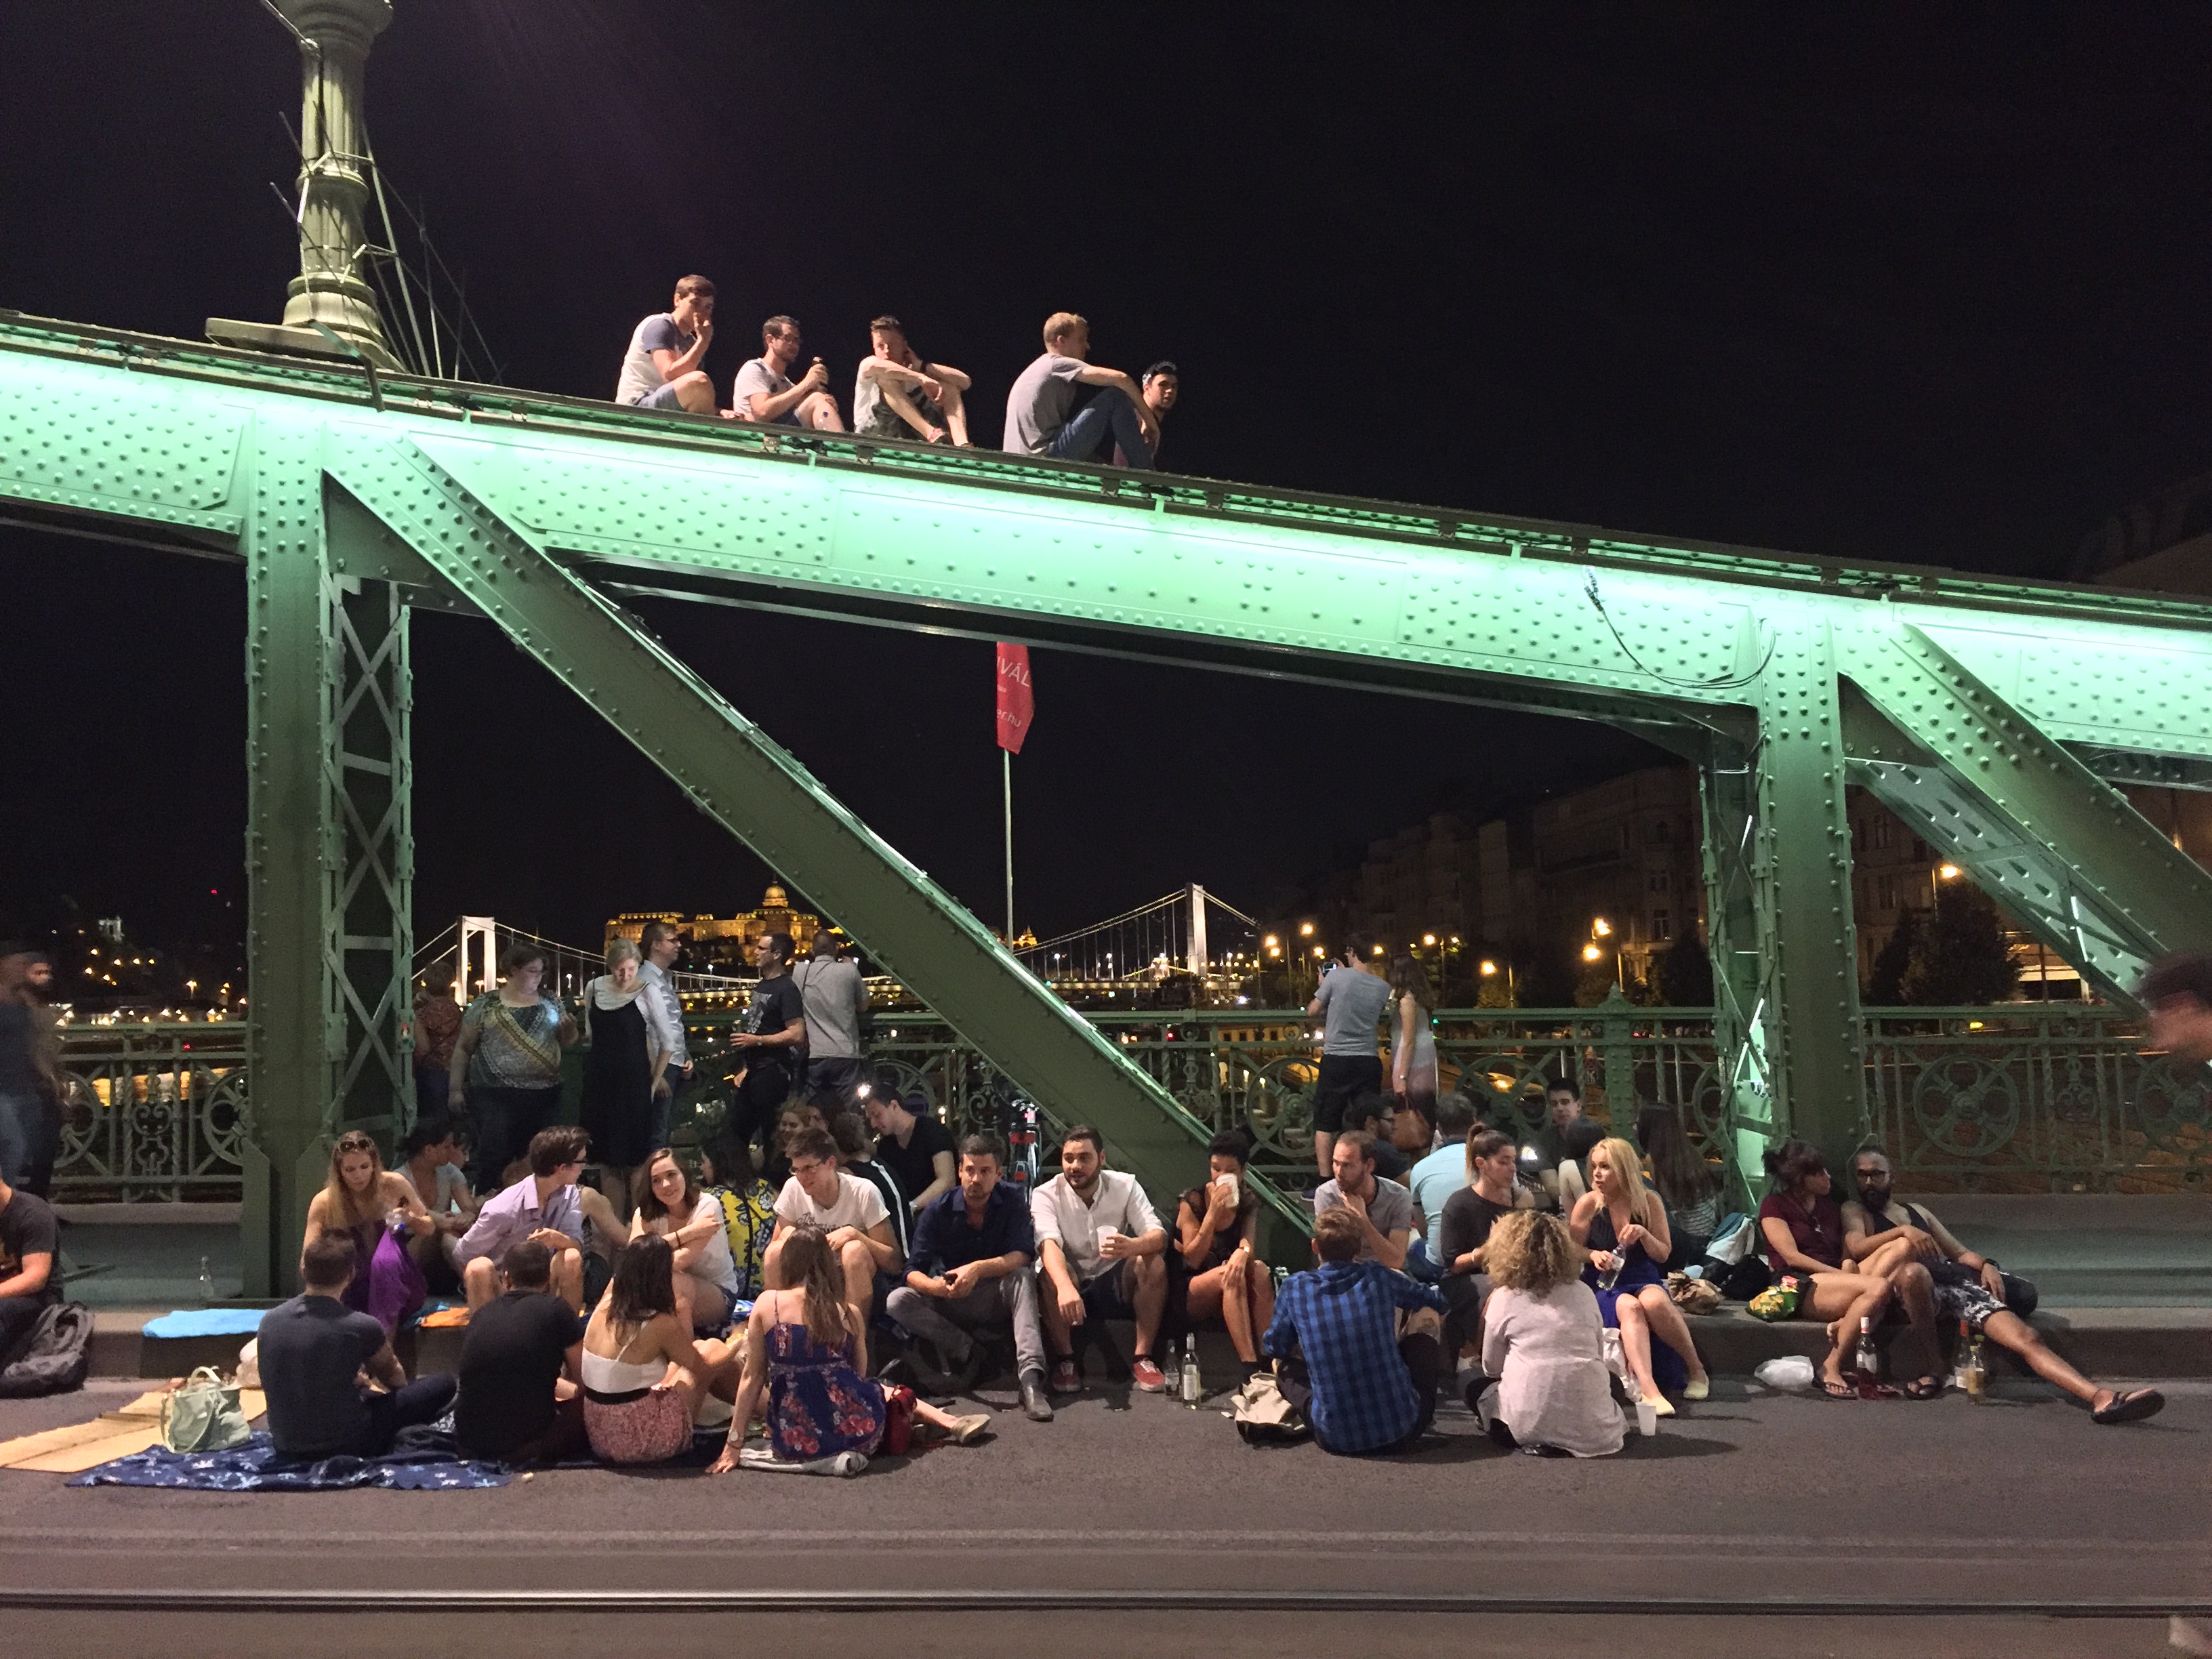 The Liberty bridge as public space. Photo by Levente Polyak